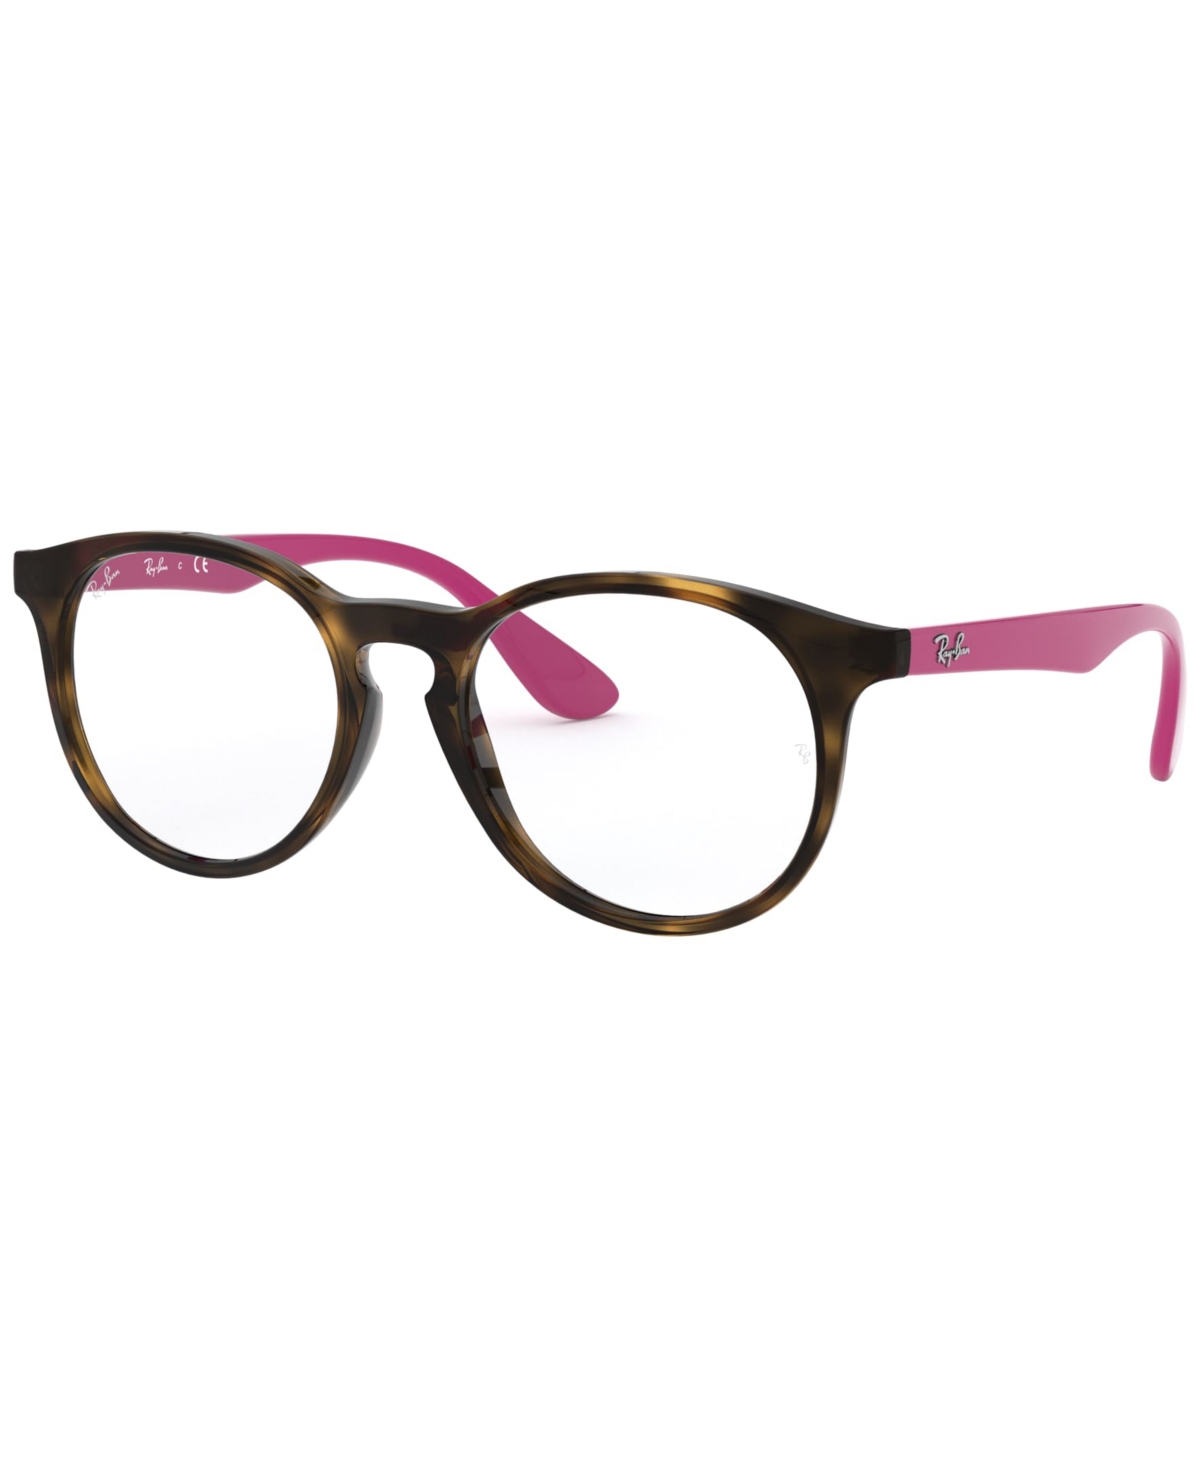 Child Eyeglasses, RB1554 - Transparent